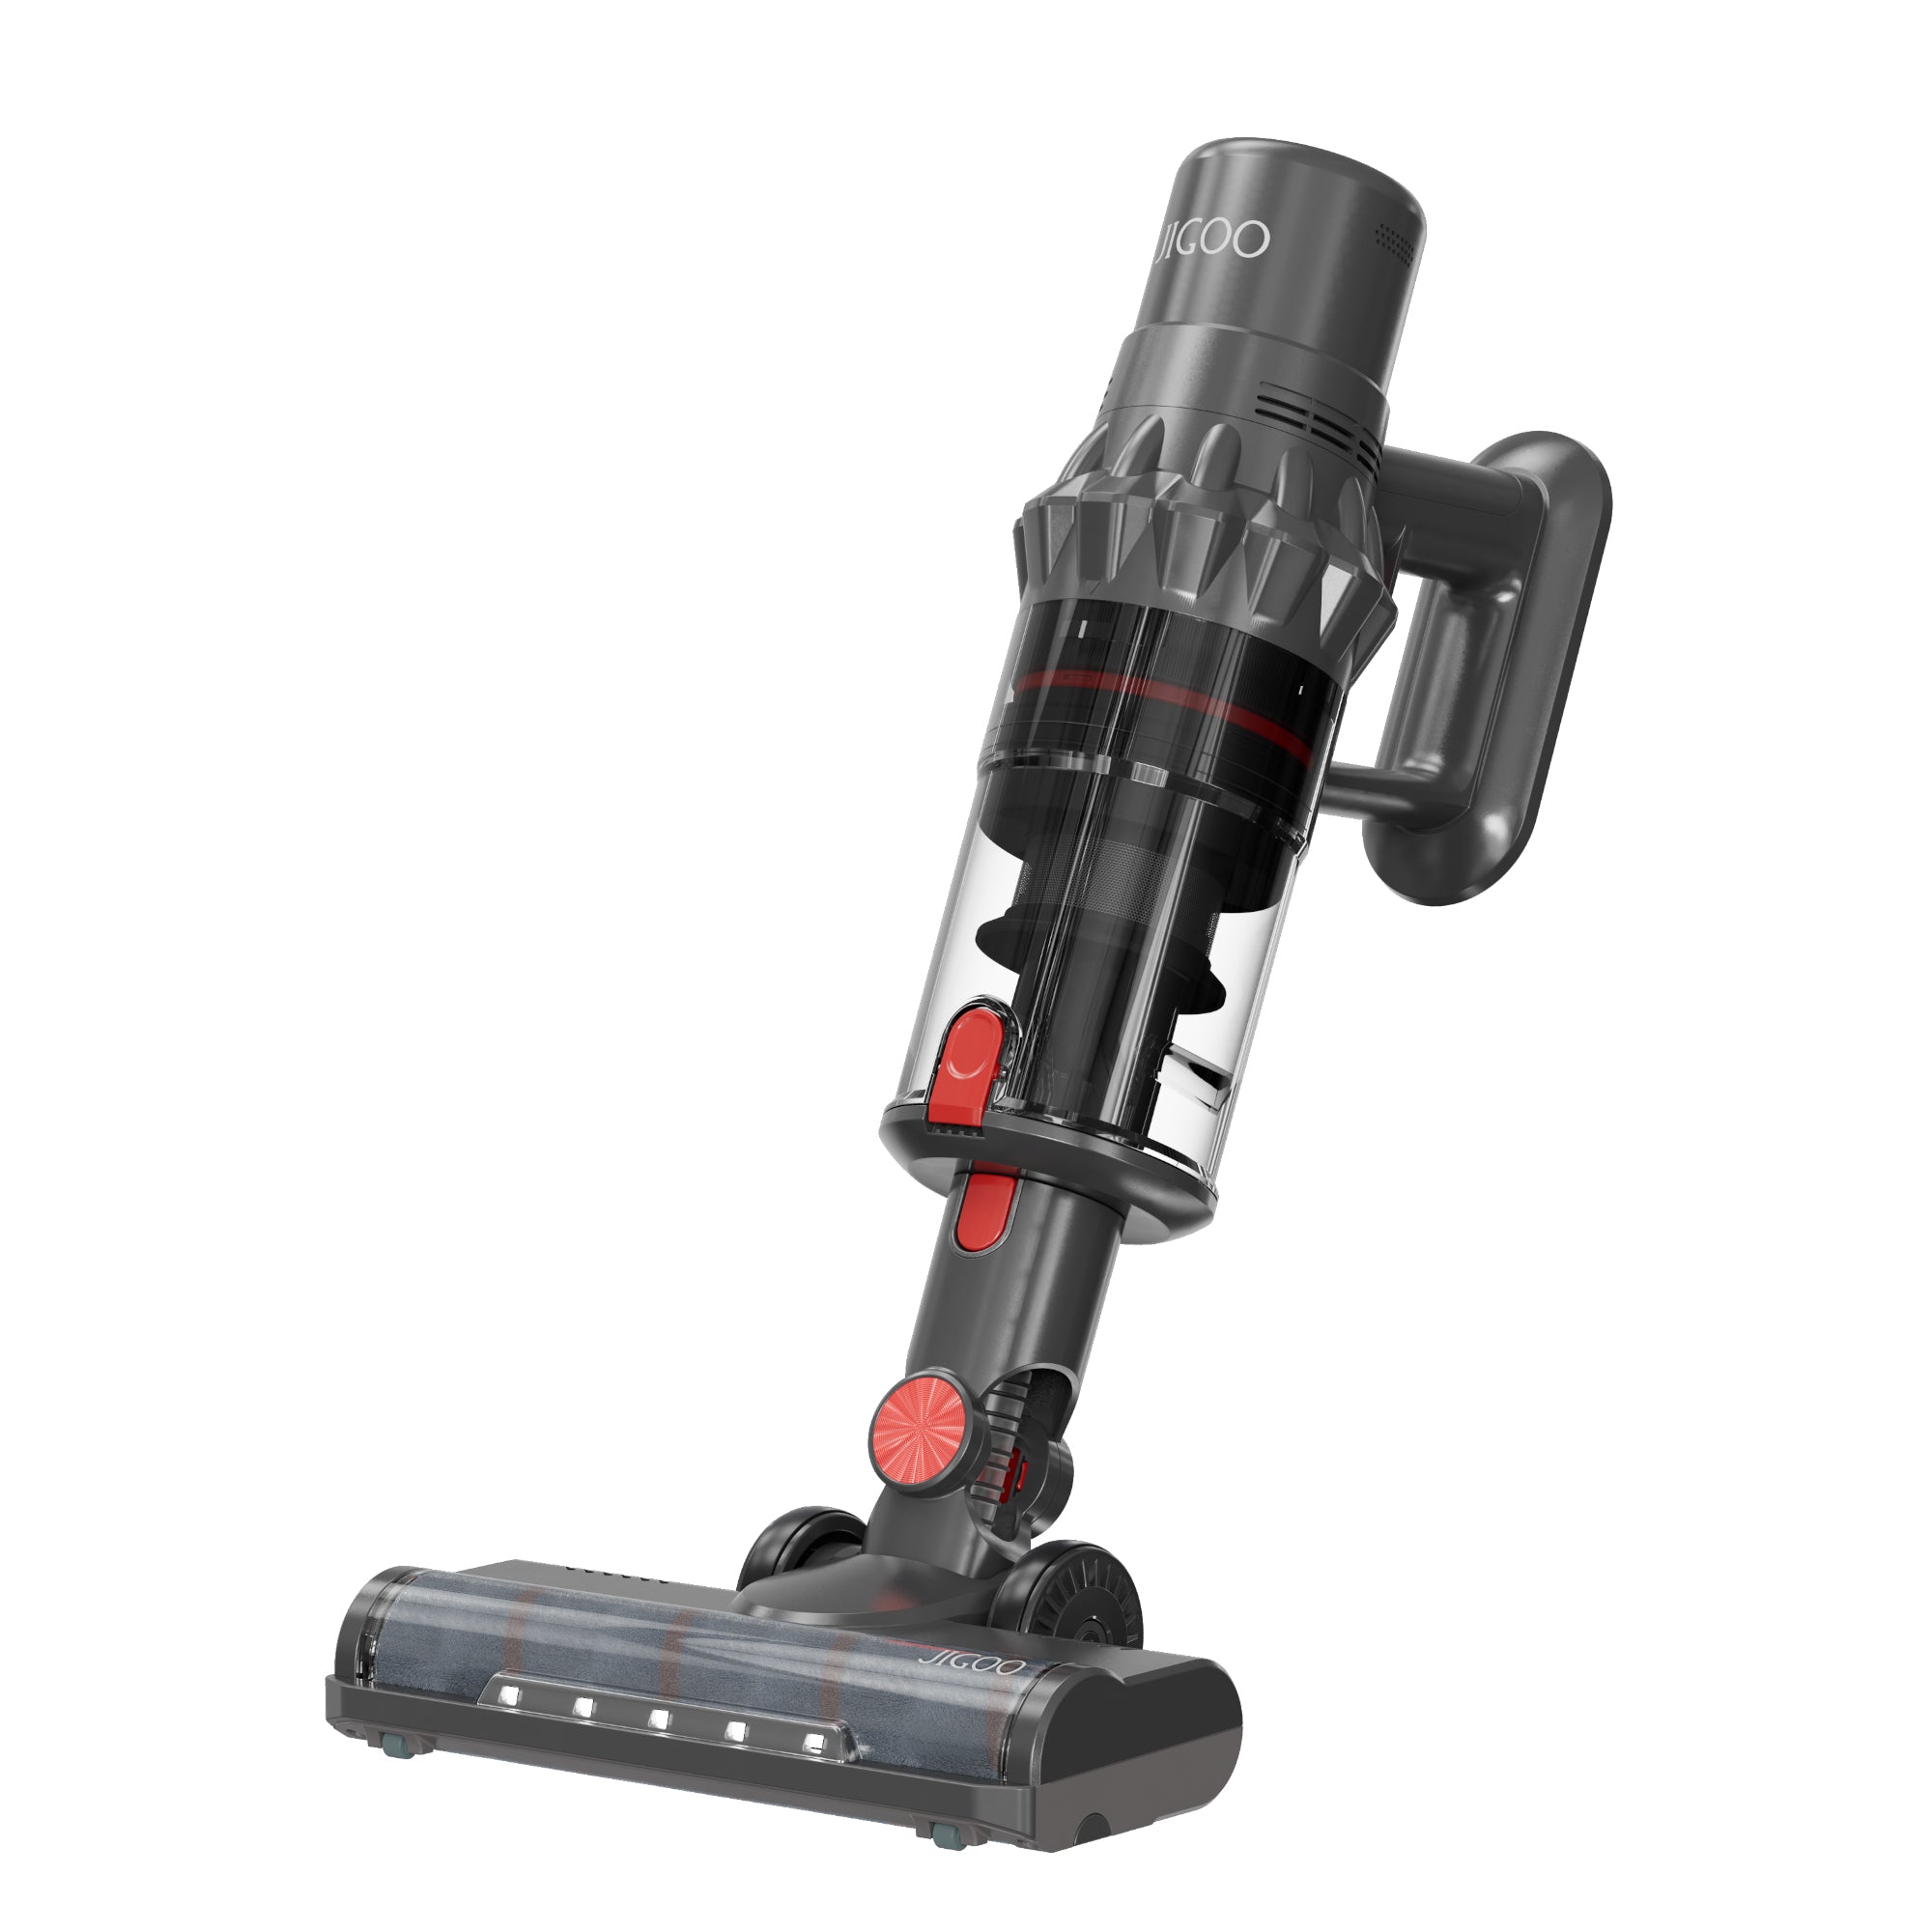 Jigoo C500 Cordless Vacuum Cleaner